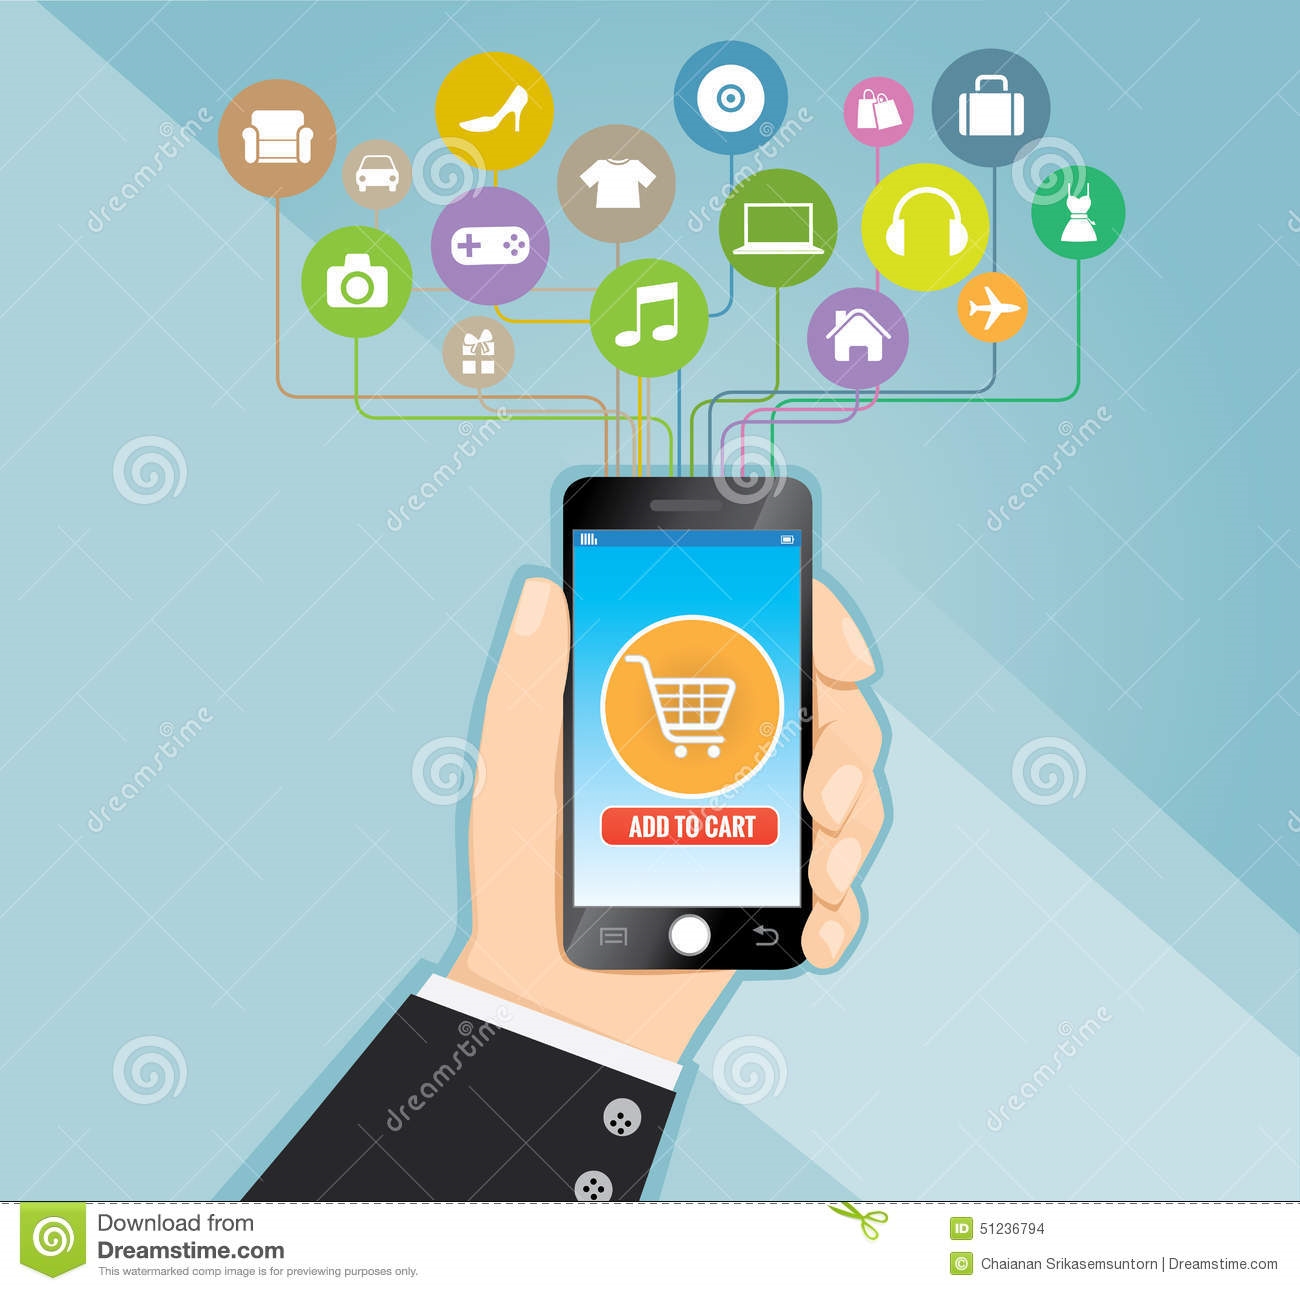 Forrester Estimates E-commerce On Smartphones Will Reach $209 Billion In 2022 | DeviceDaily.com